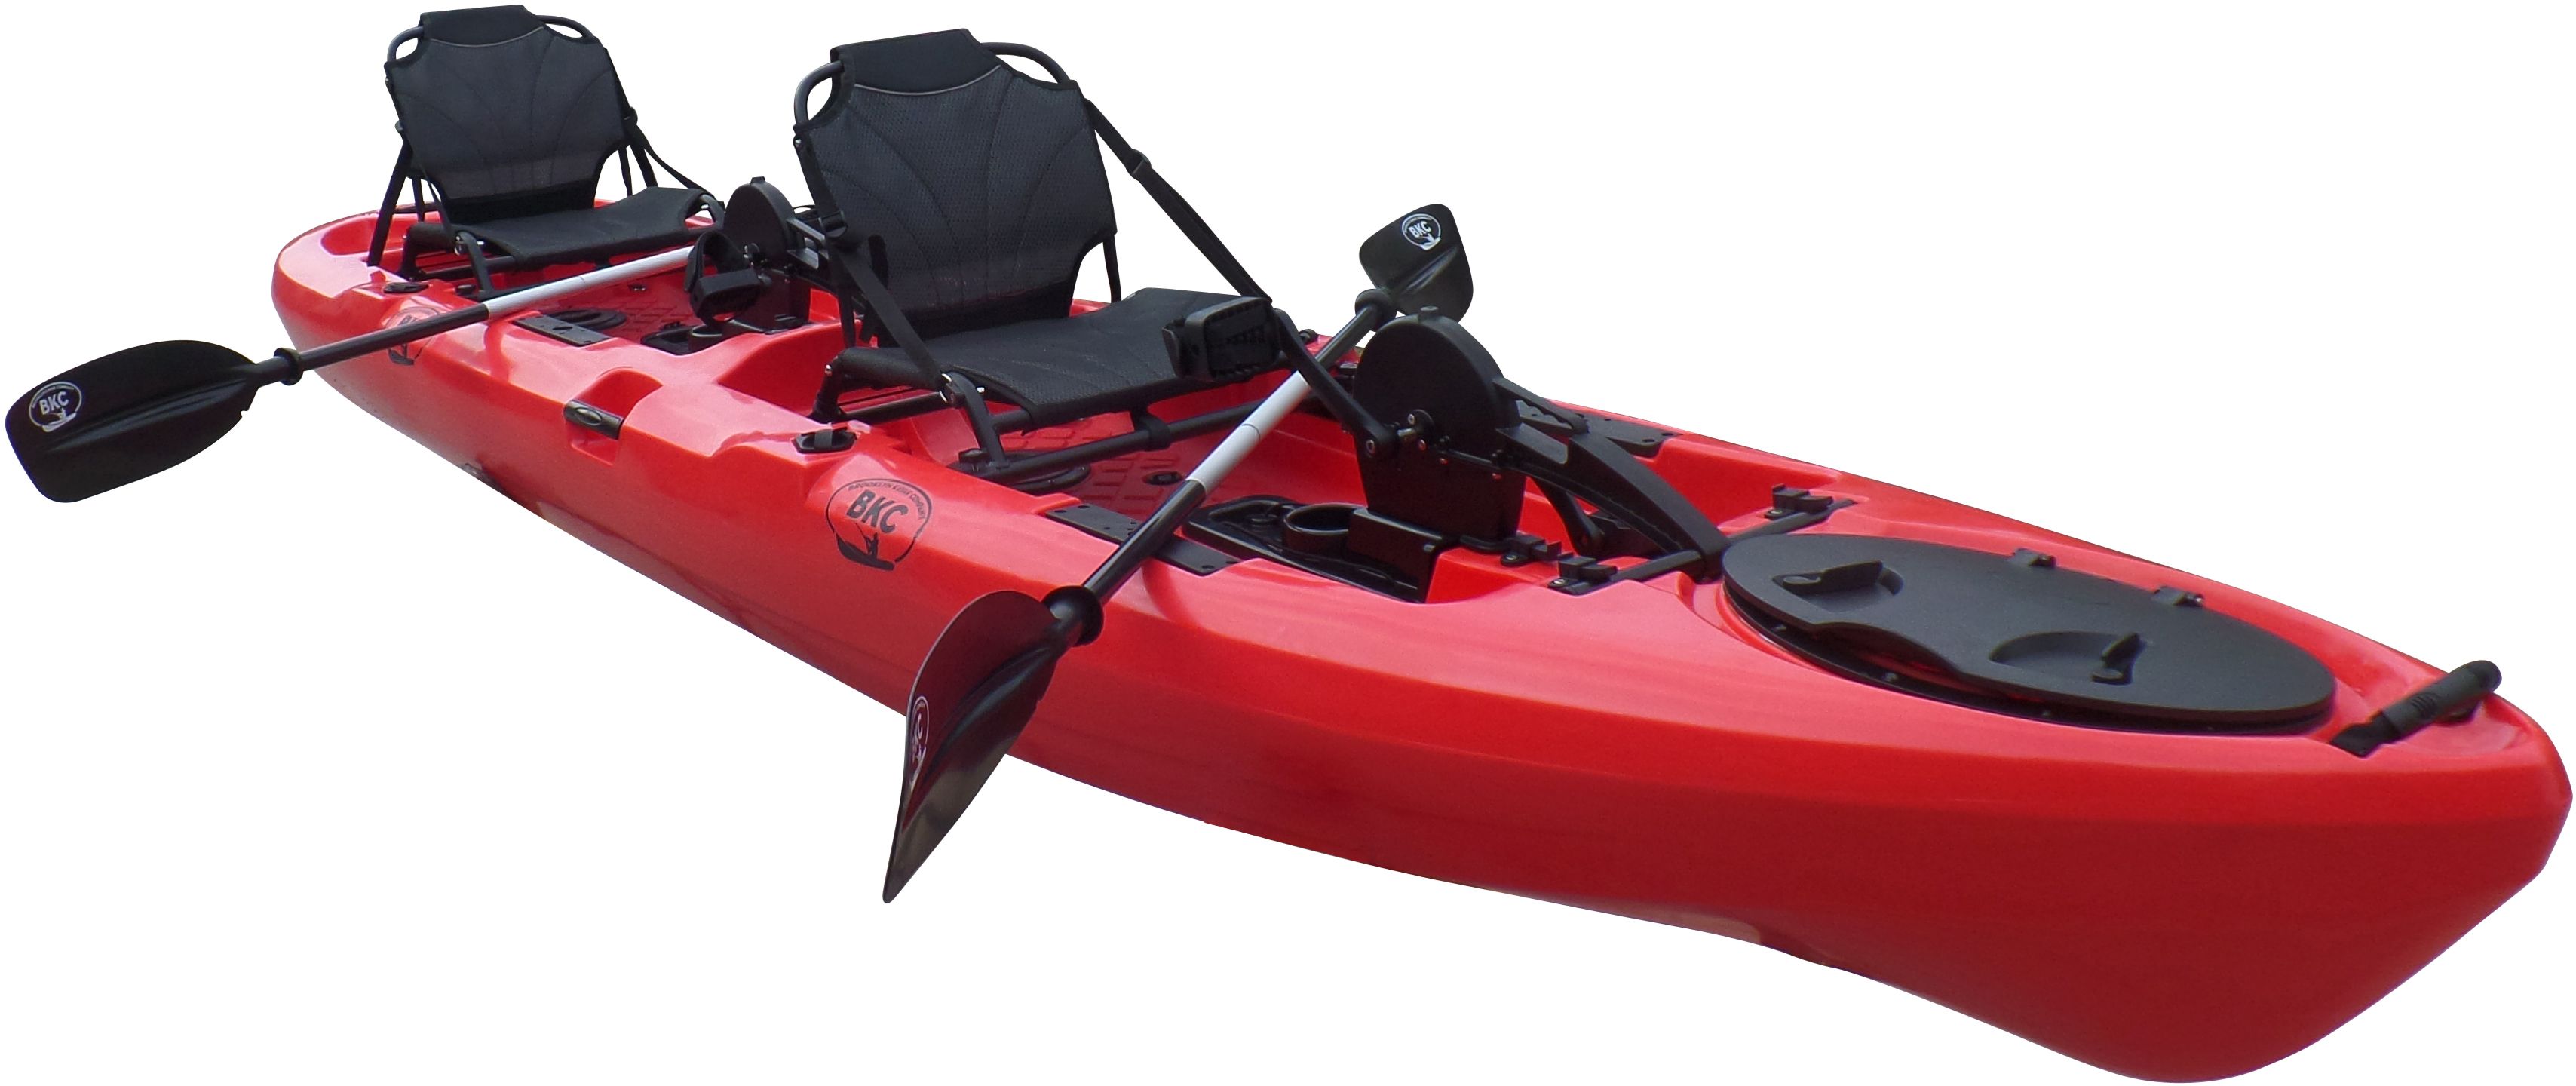 Brooklyn Kayak Company, BKC TK122 Angler Tandem Coastal Cruiser